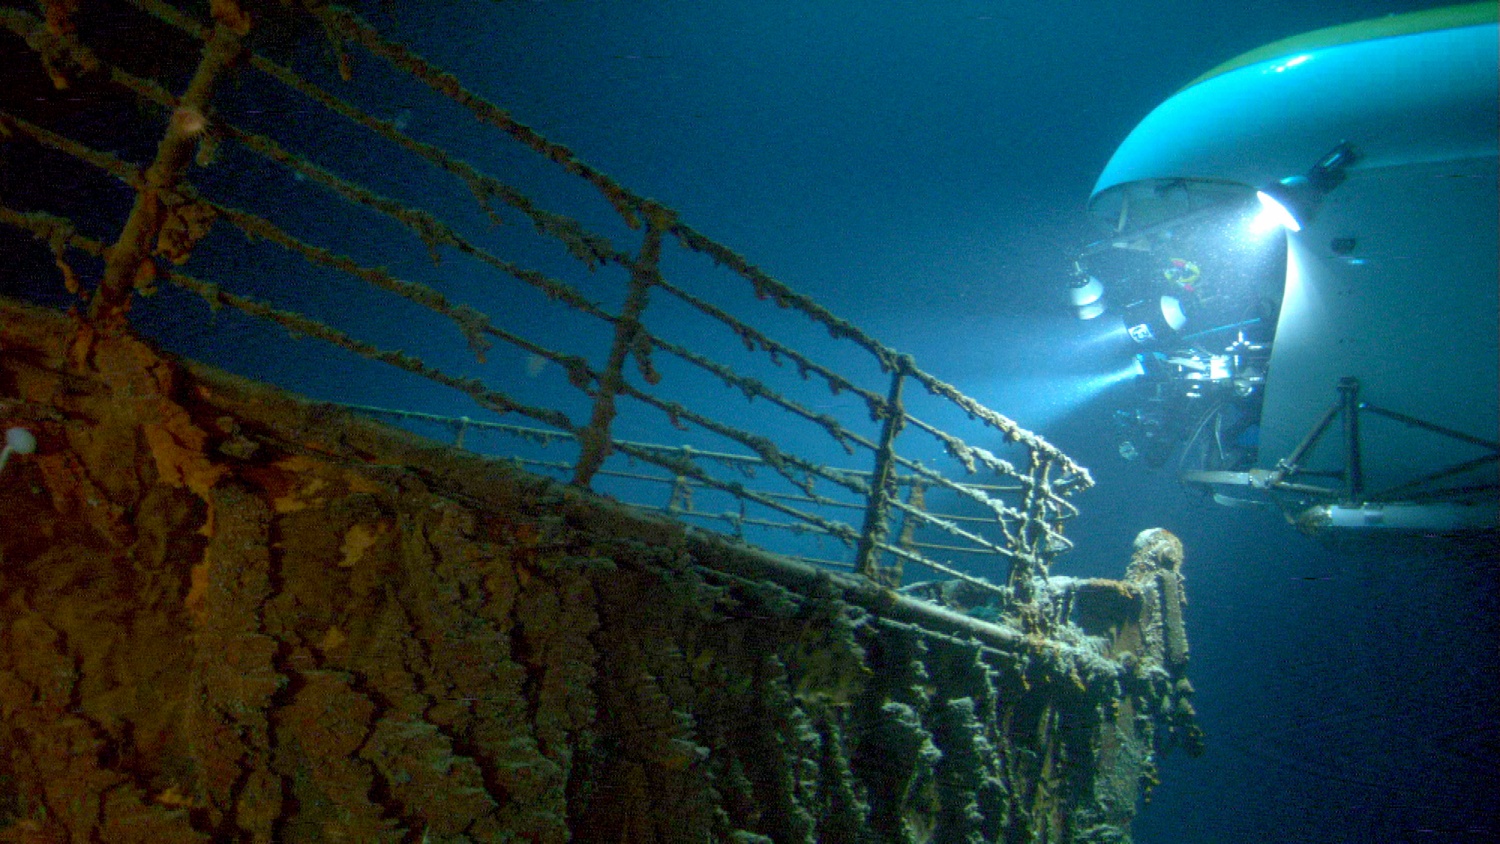 The Titanic Wreck - The Titanic